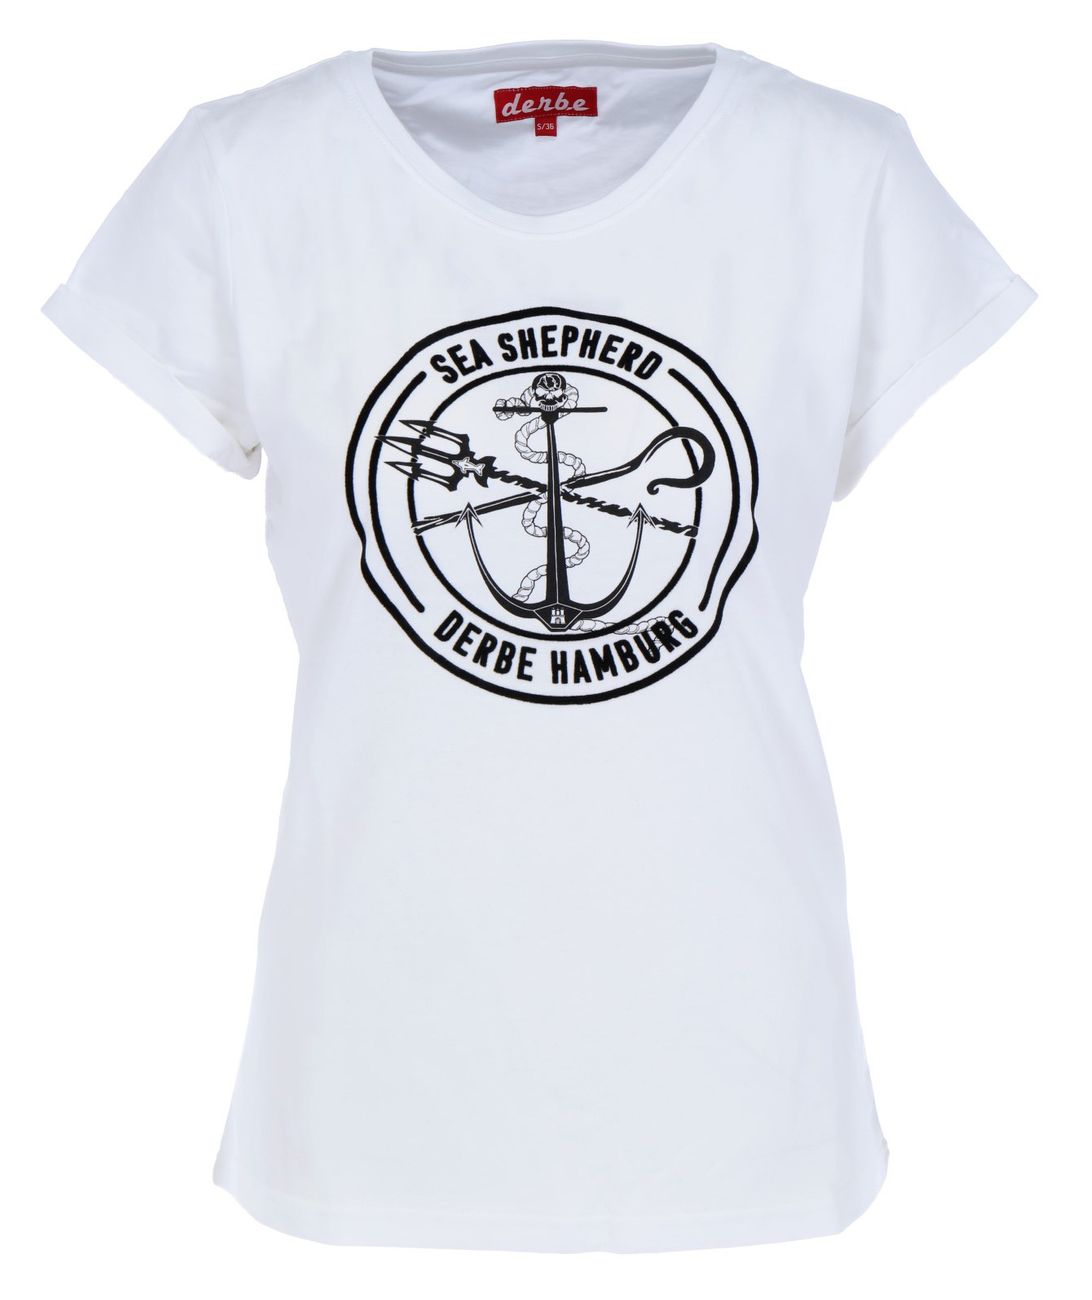 DERBE HAMBURG JF BARBE MONO GOTS iC Damen T-Shirt Sea Shepherd - Derbe Hamburg - SAGATOO - 4057787841438